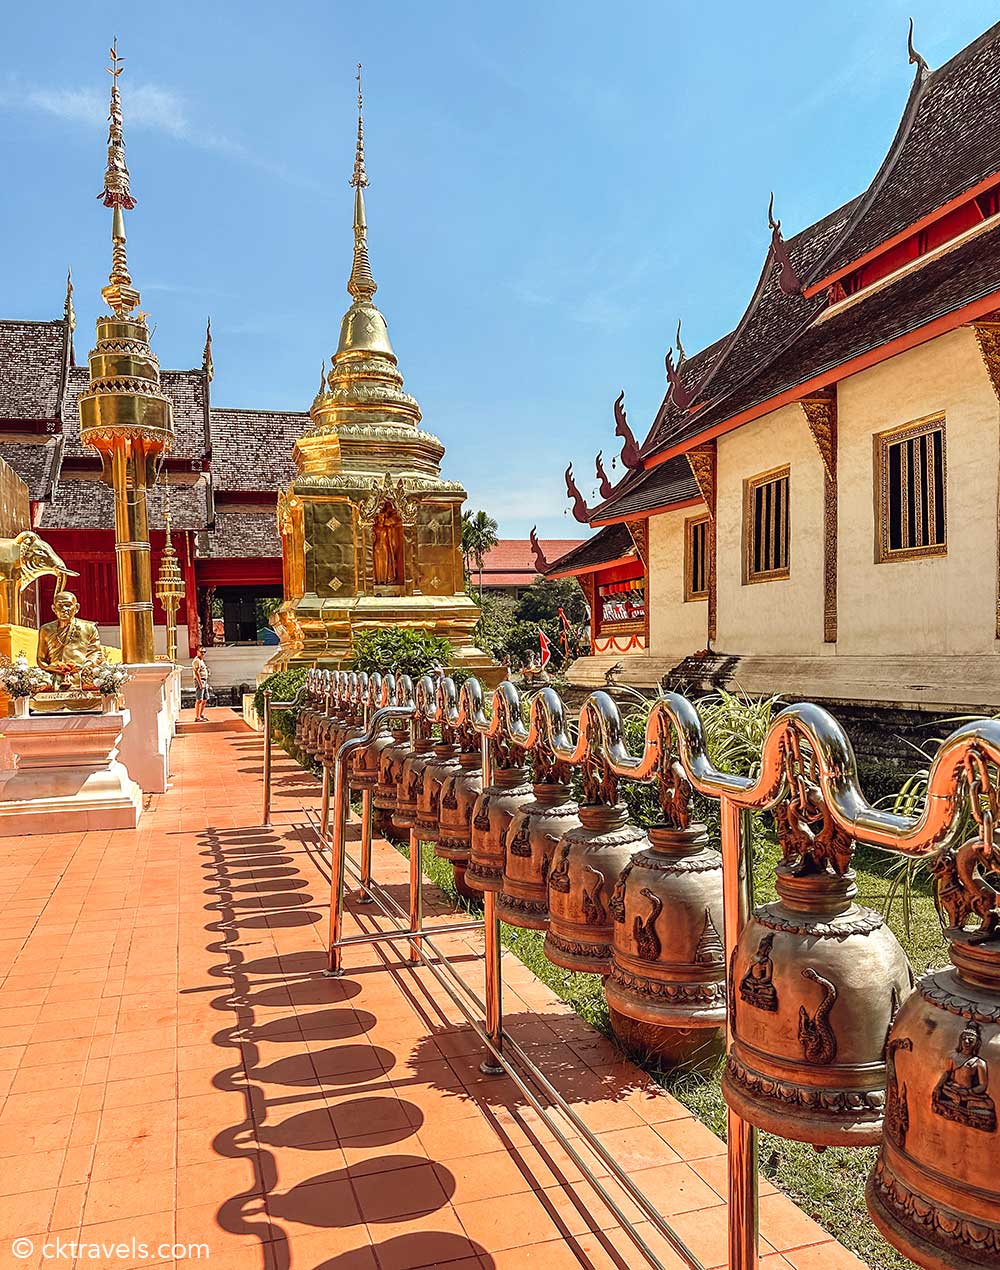 Wat Phra Singh temple in Chiang Mai